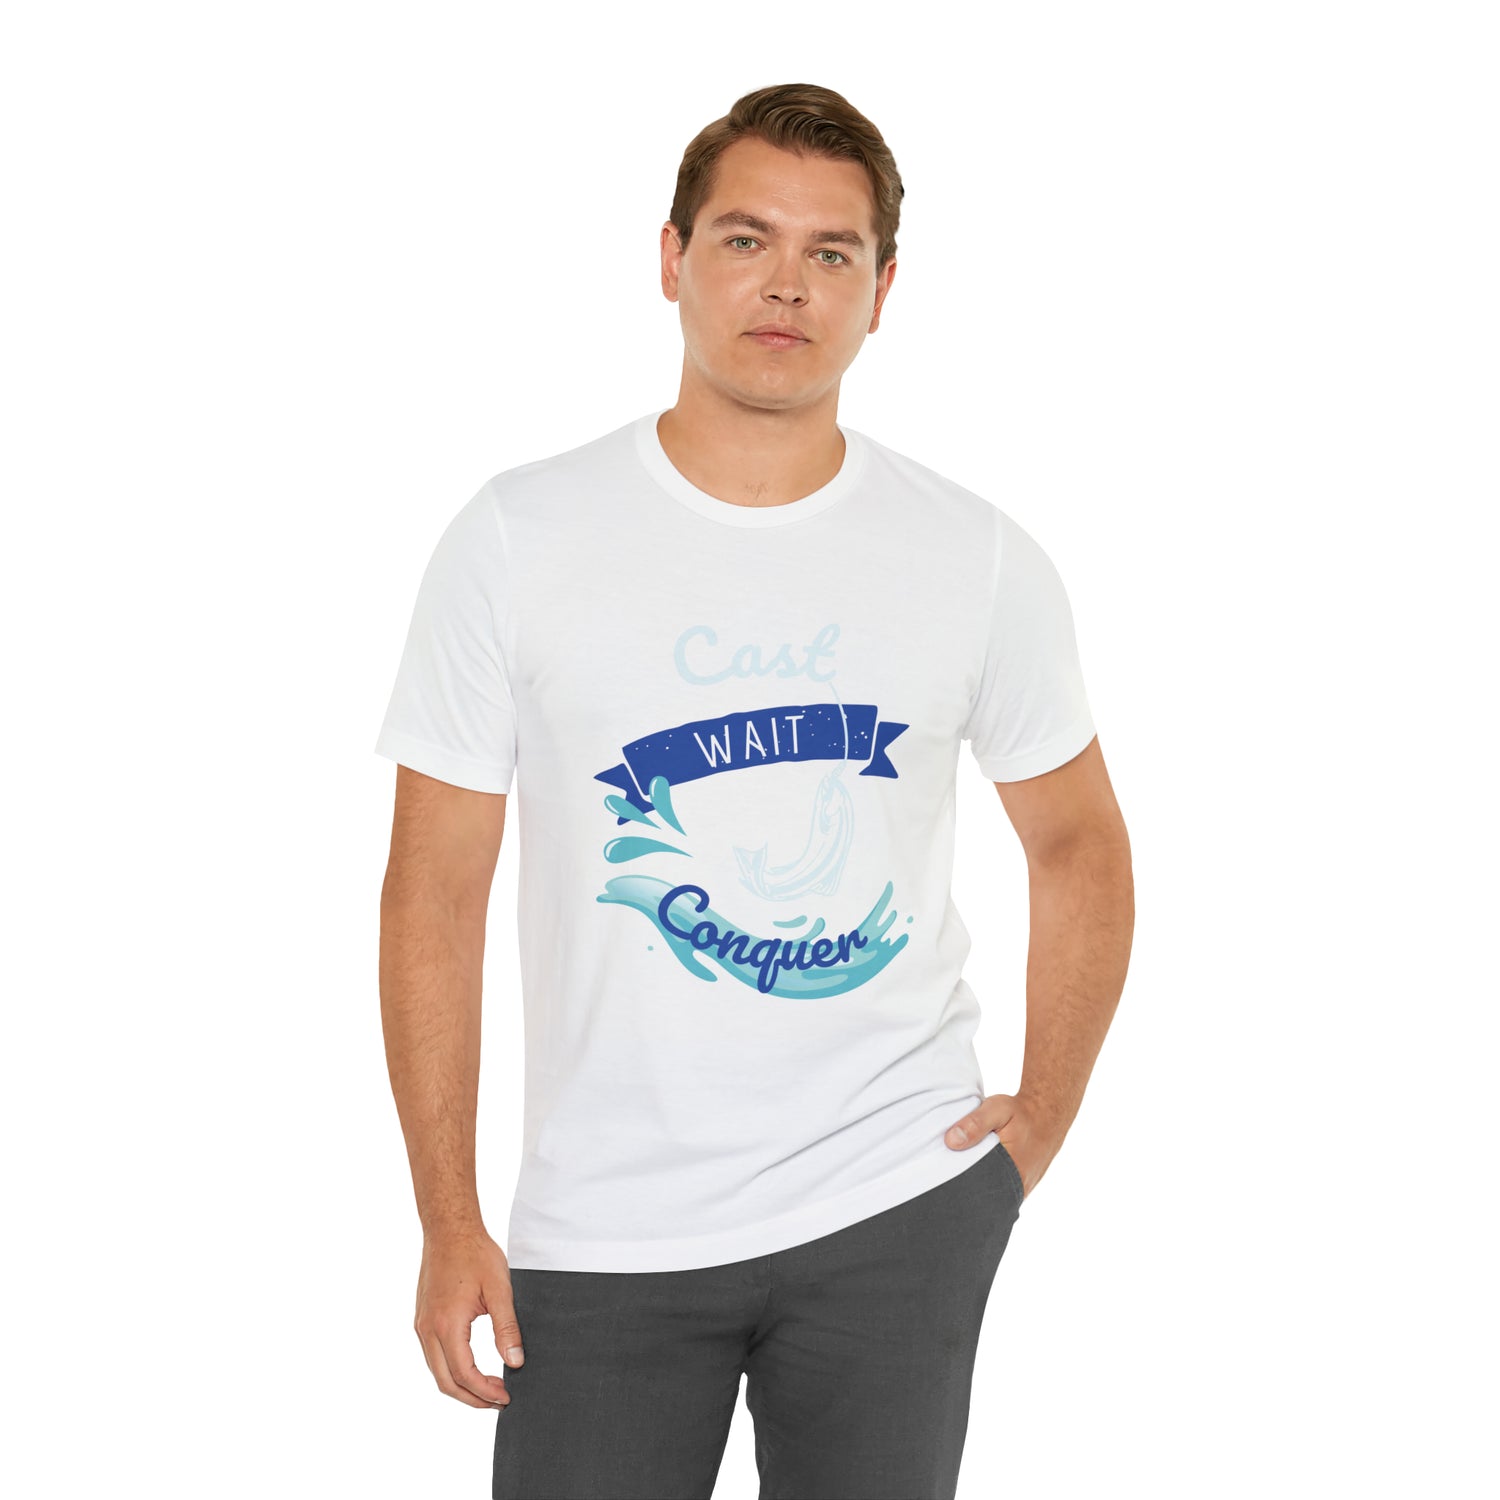 T-Shirt Tshirt Design Gift for Friend and Family Short Sleeved Shirt Fishing Hobby Aesthetic Petrova Designs